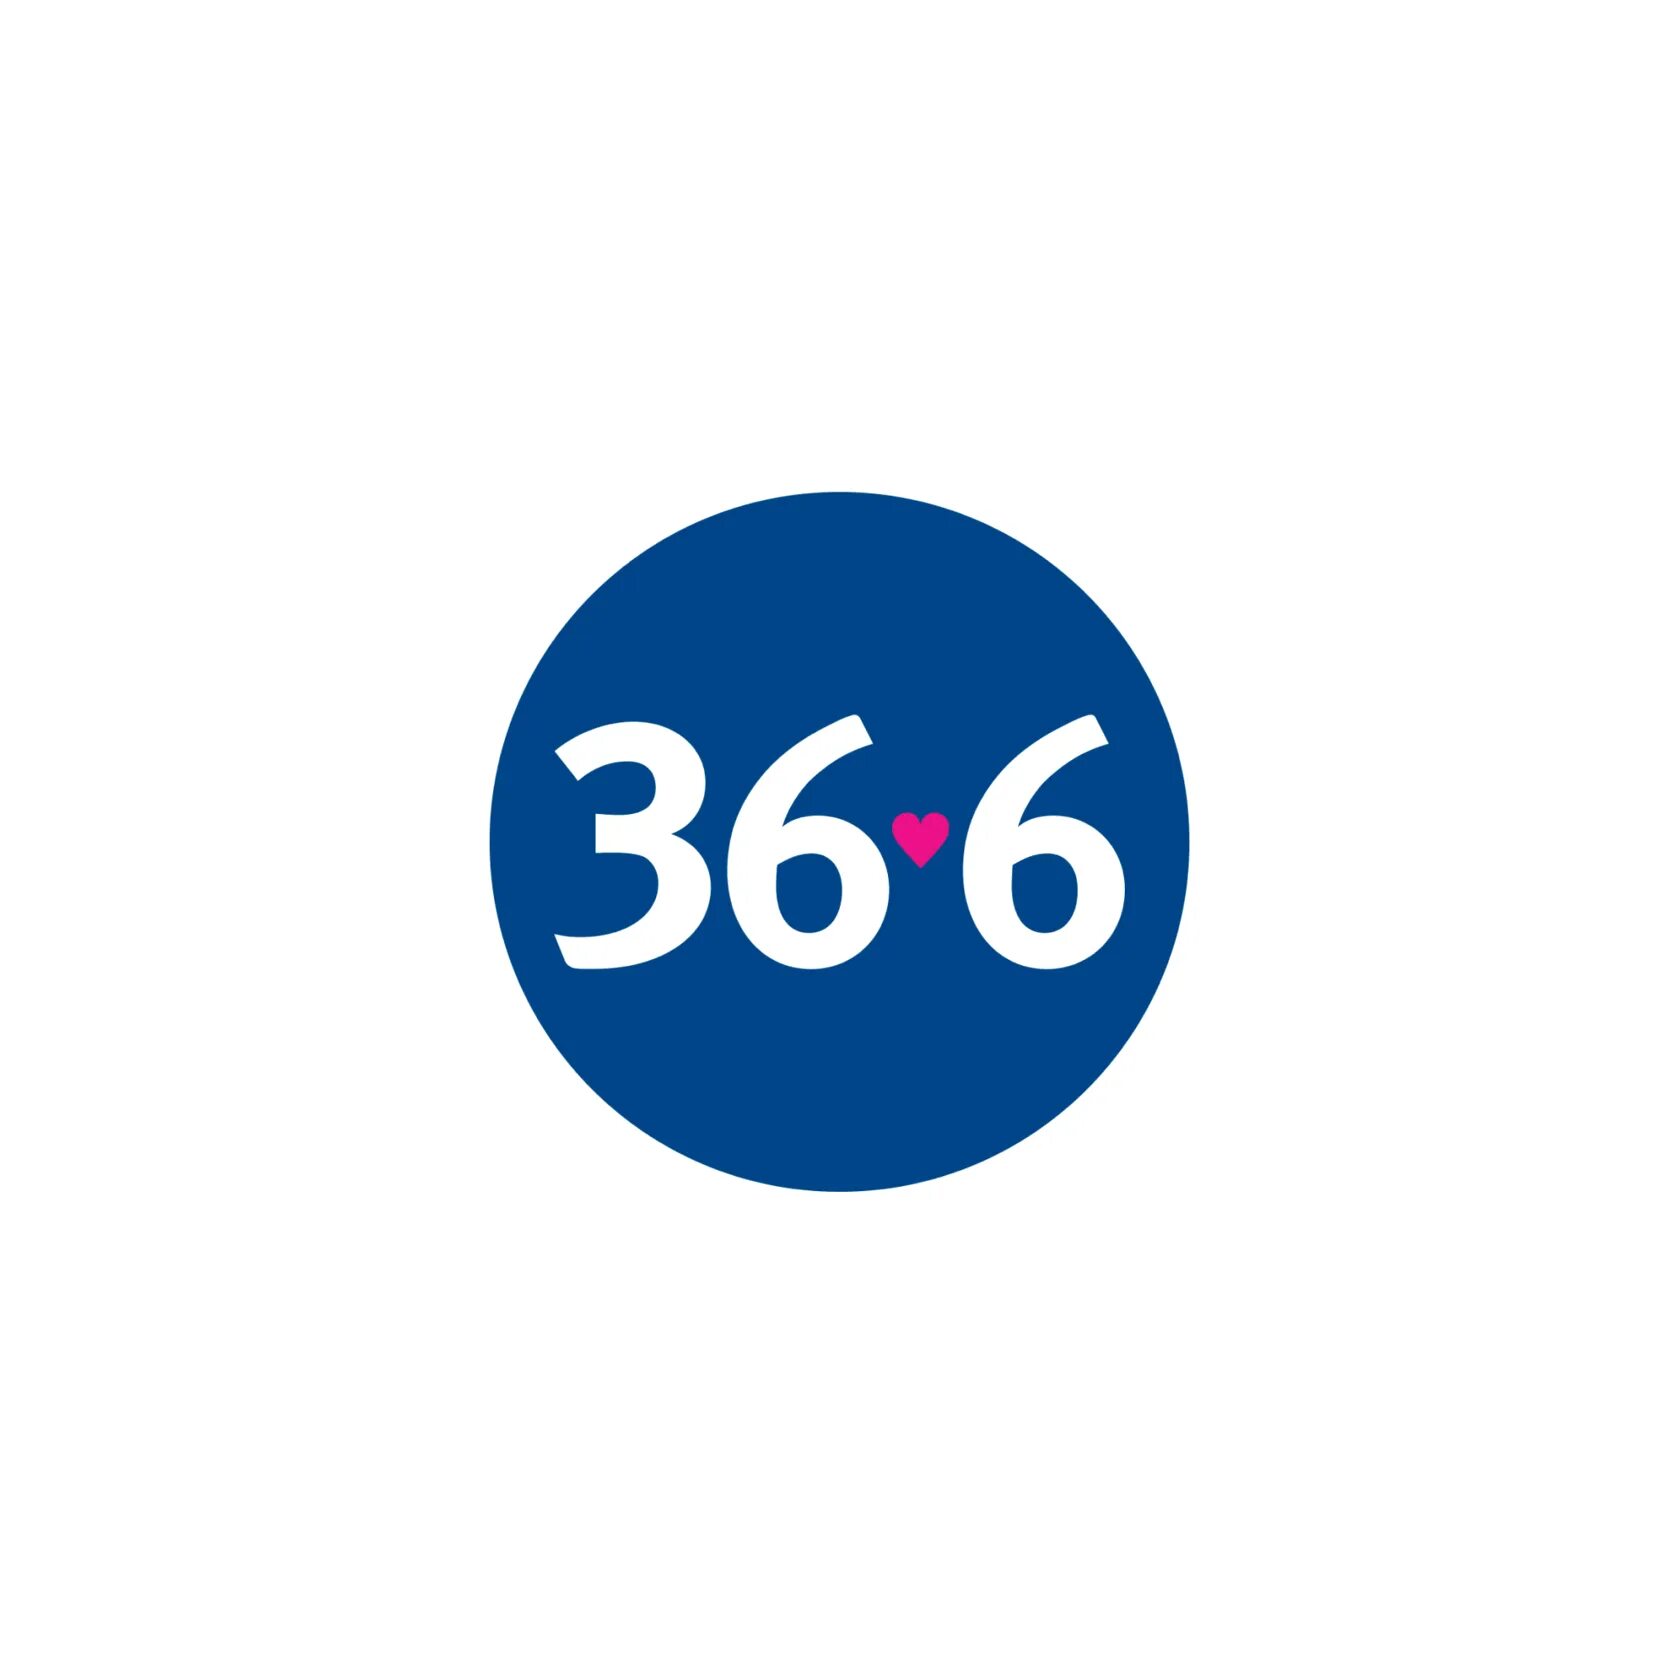 36 и 6 текст. ПАО аптечная сеть 36,6. Логотип 36.6. Аптека 36.6 лого. Аптека логотип аптека 36.6.